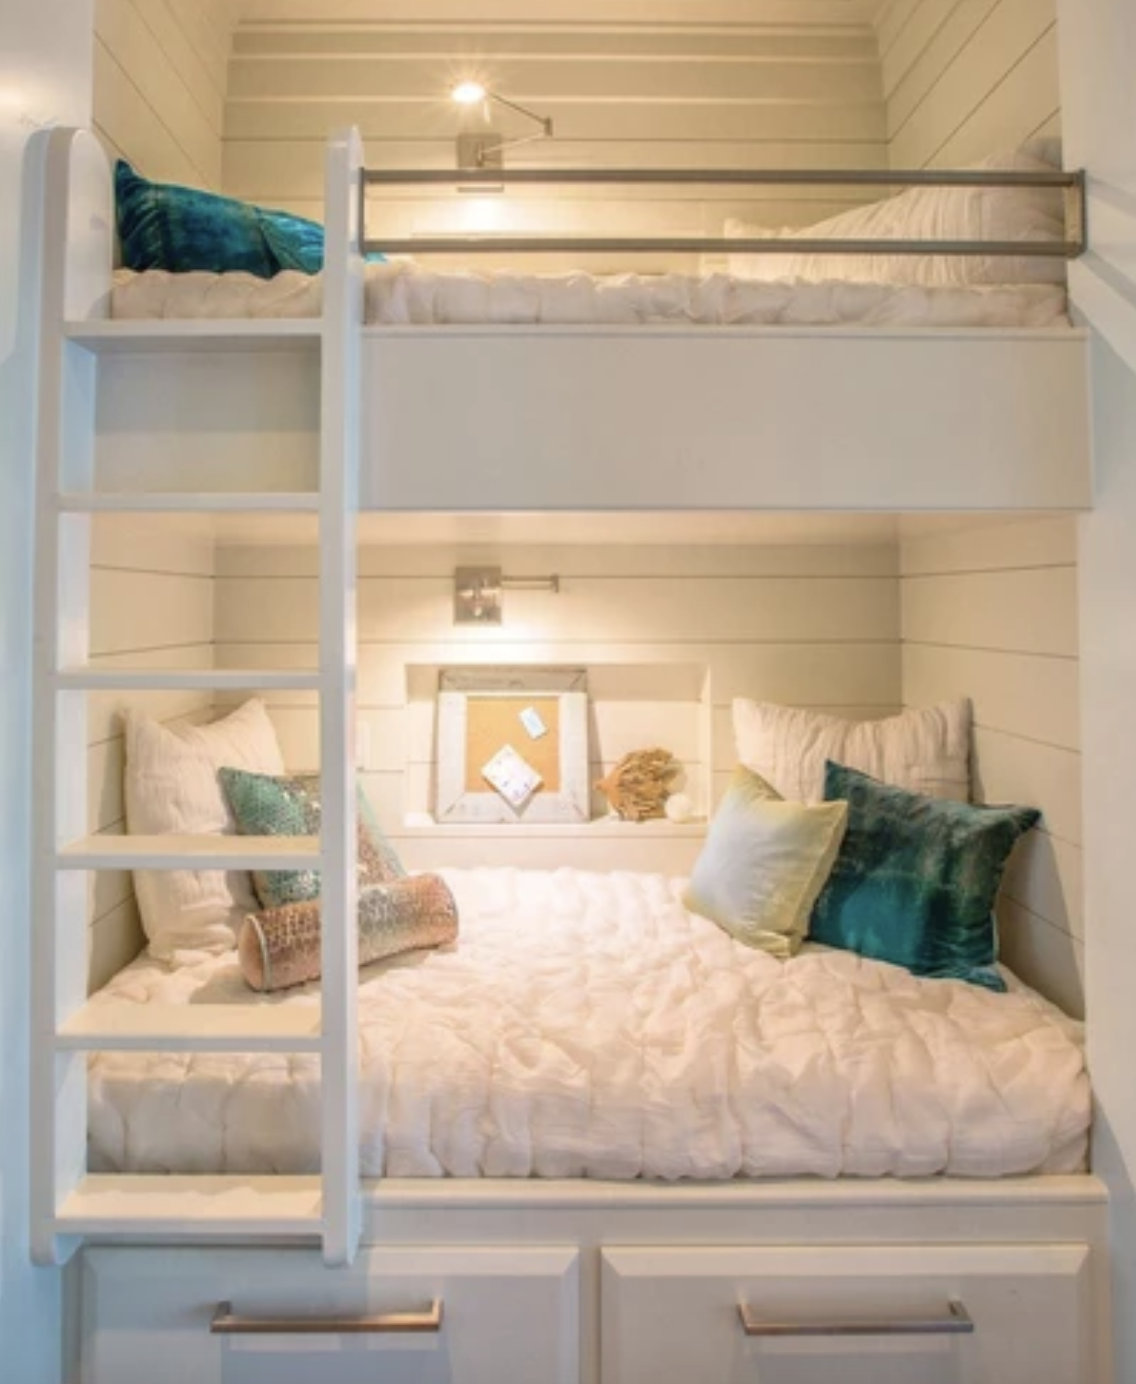 adult bunk beds